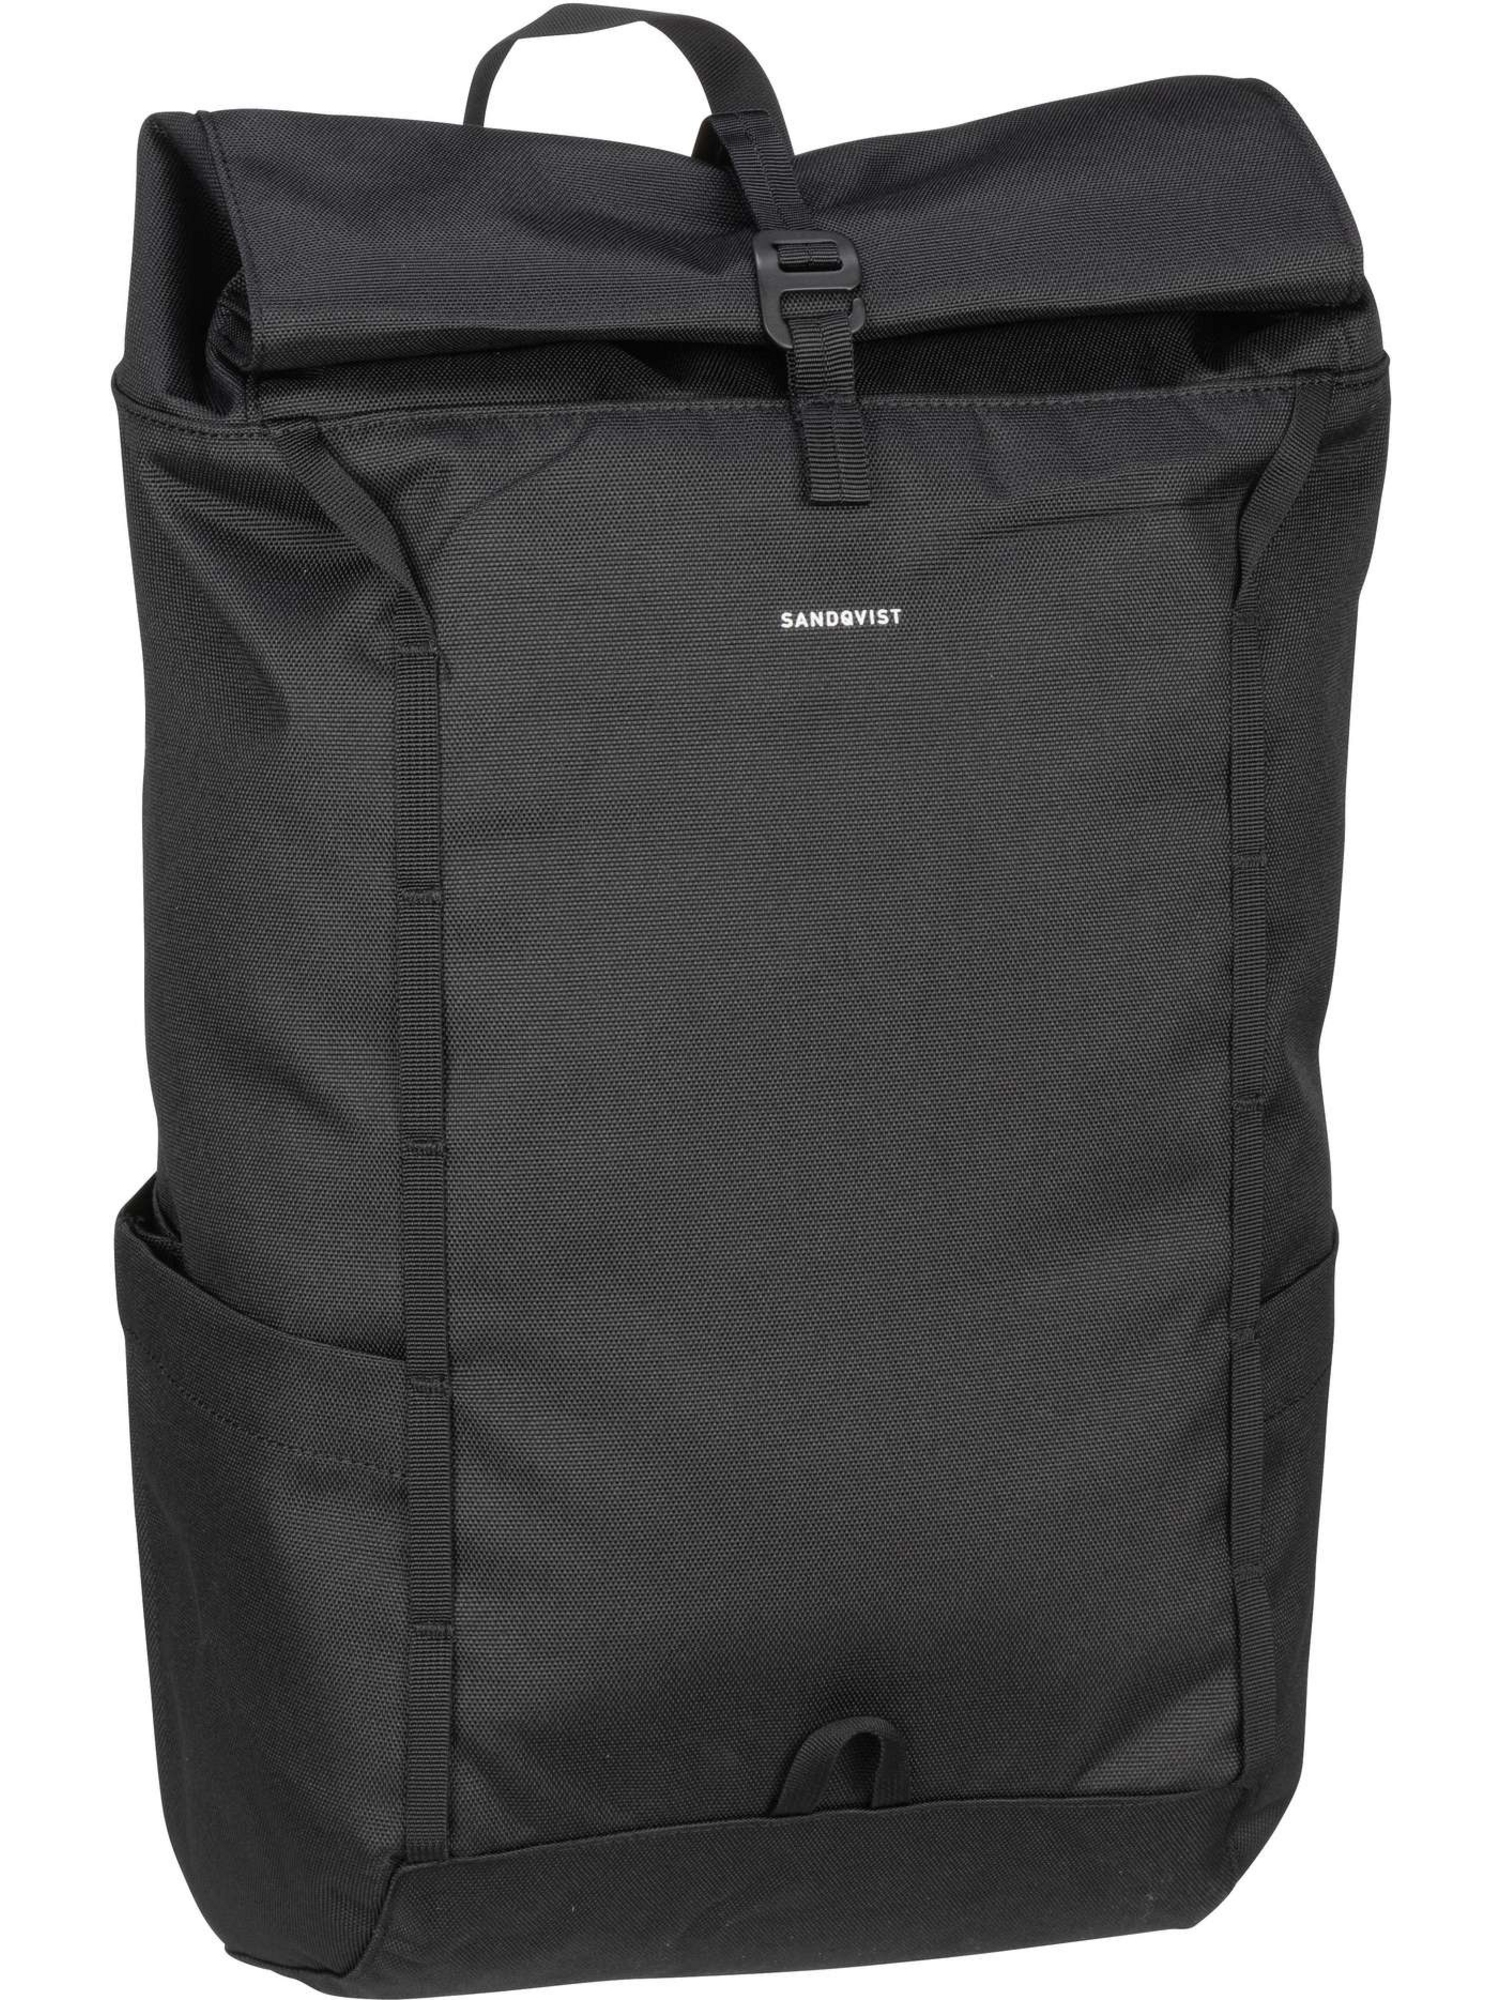 рюкзак sandqvist arvid оливковый размер one size Рюкзак SANDQVIST Rolltop Arvid Rolltop Backpack, черный